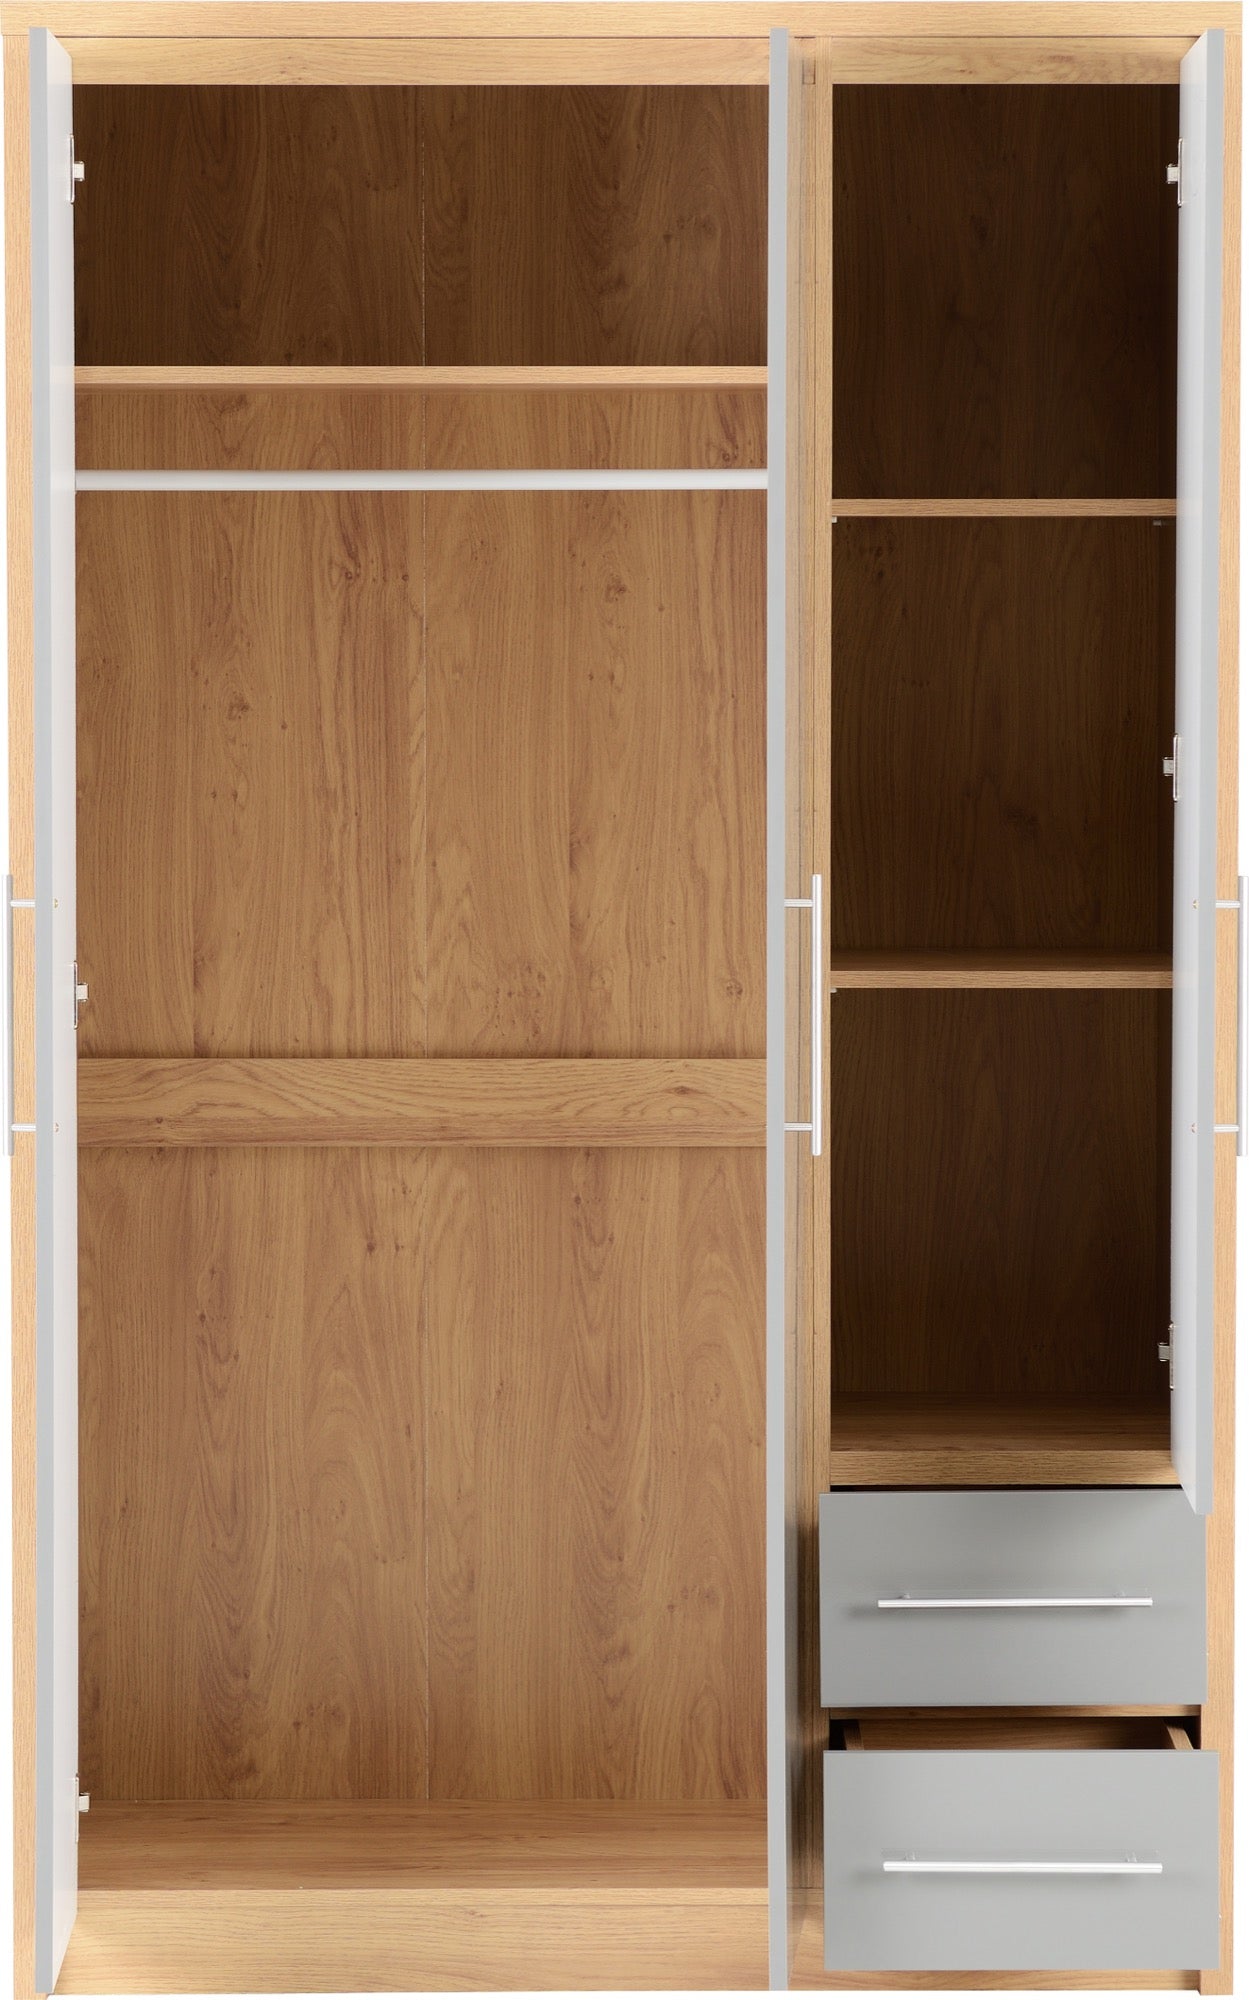 wardrobe 3 door with drawers